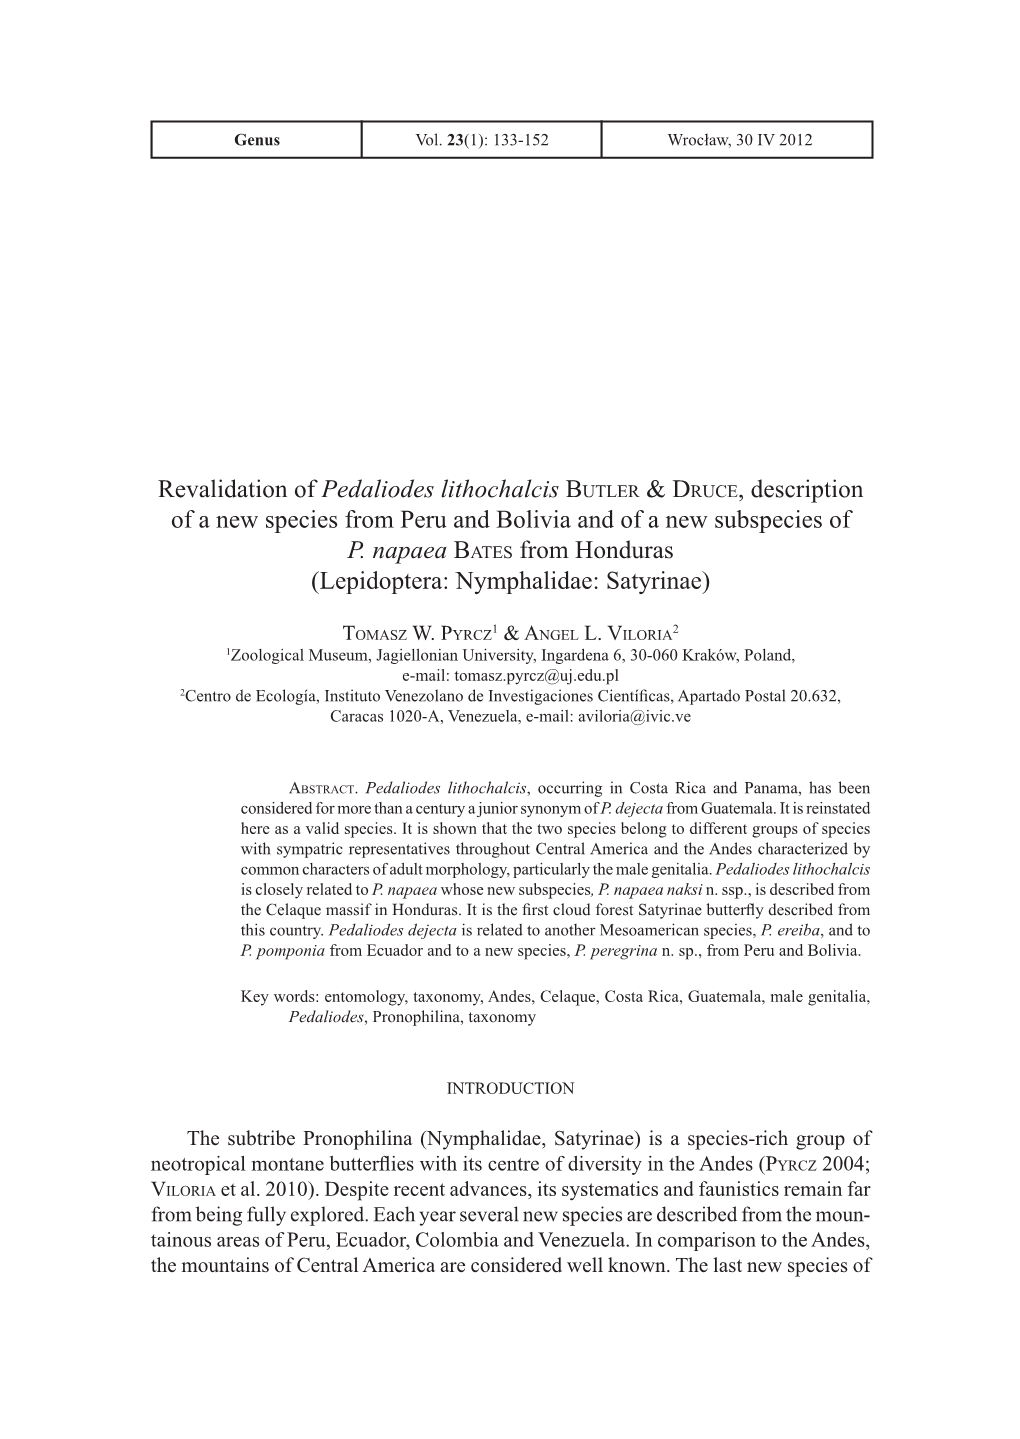 Revalidation of Pedaliodes Lithochalcis Butler & Druce